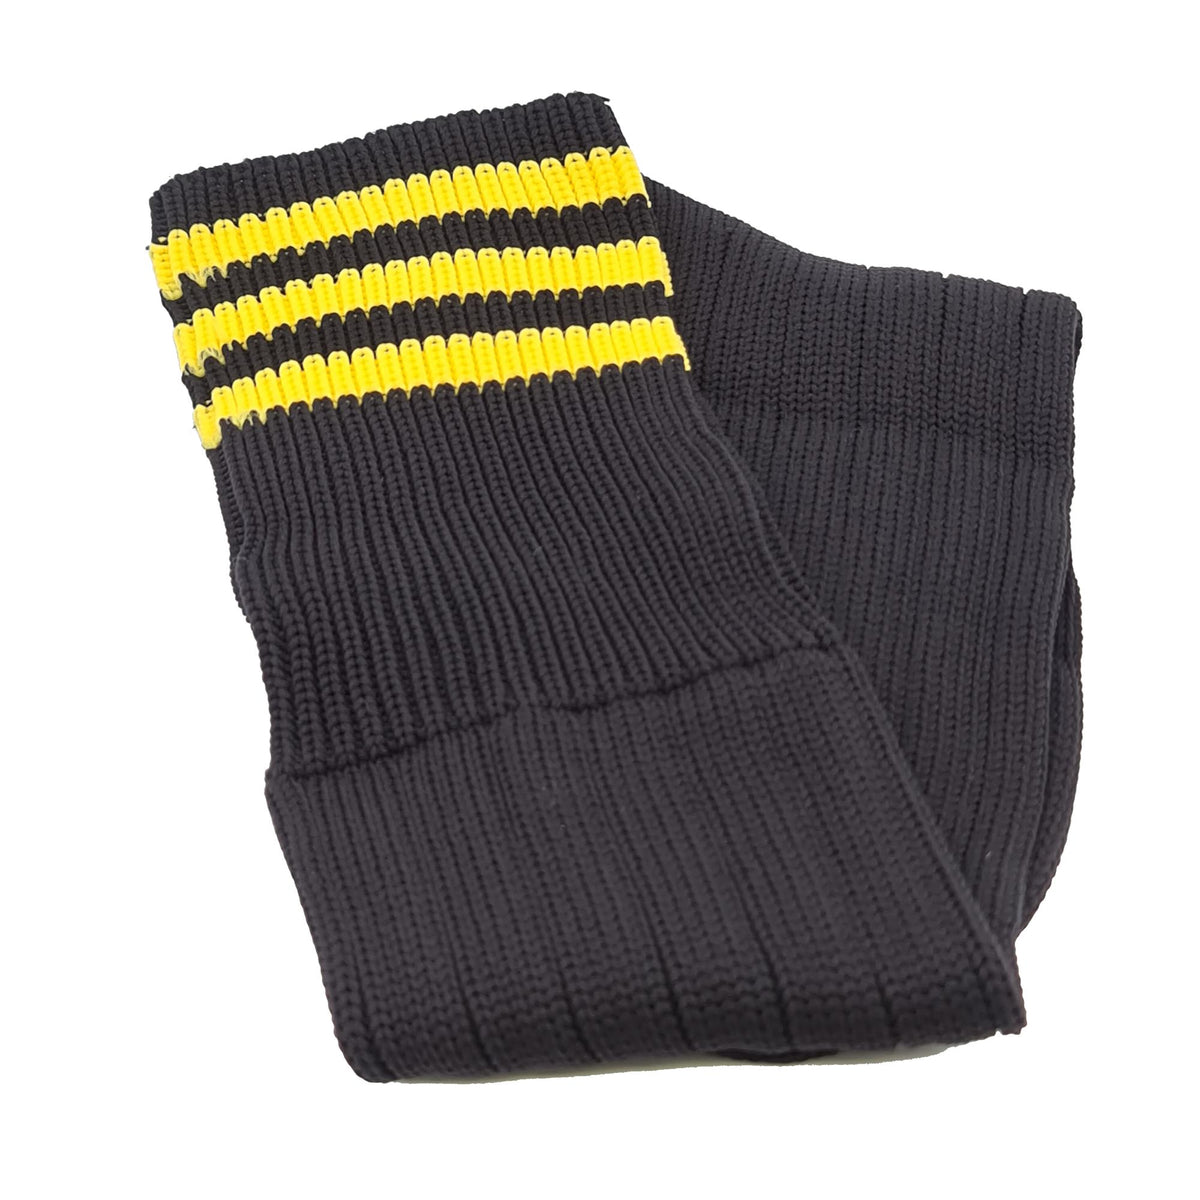 Three Stripes Football Rugby Premium Socks - Made In UK - BLACK/YELLOW - MENS ( UK 6-8)